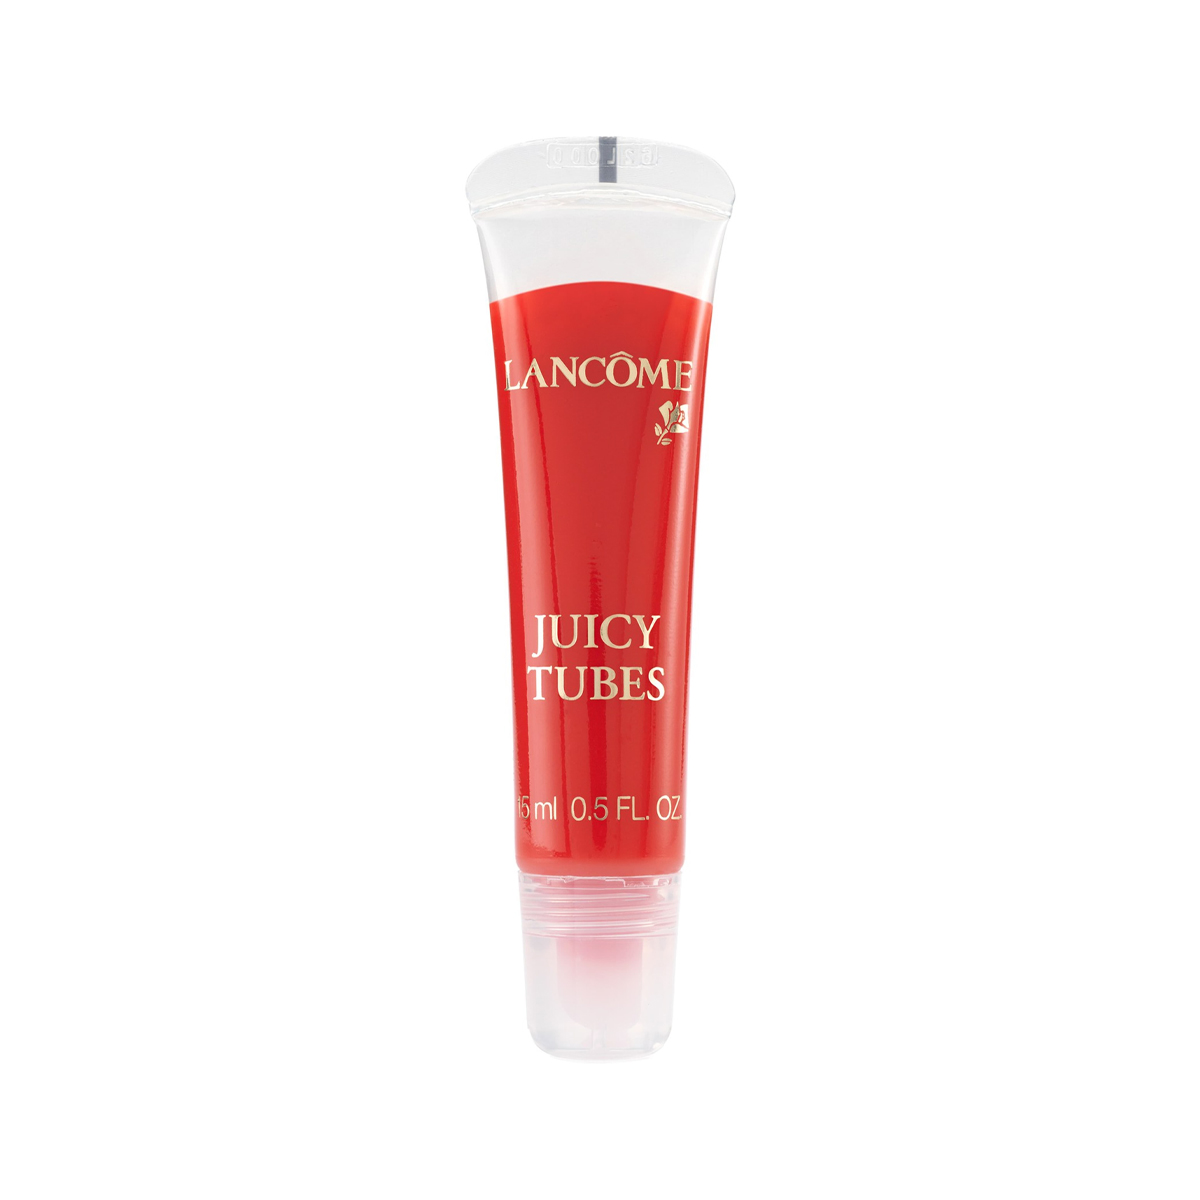 Lancôme Juicy Tubes lip gloss